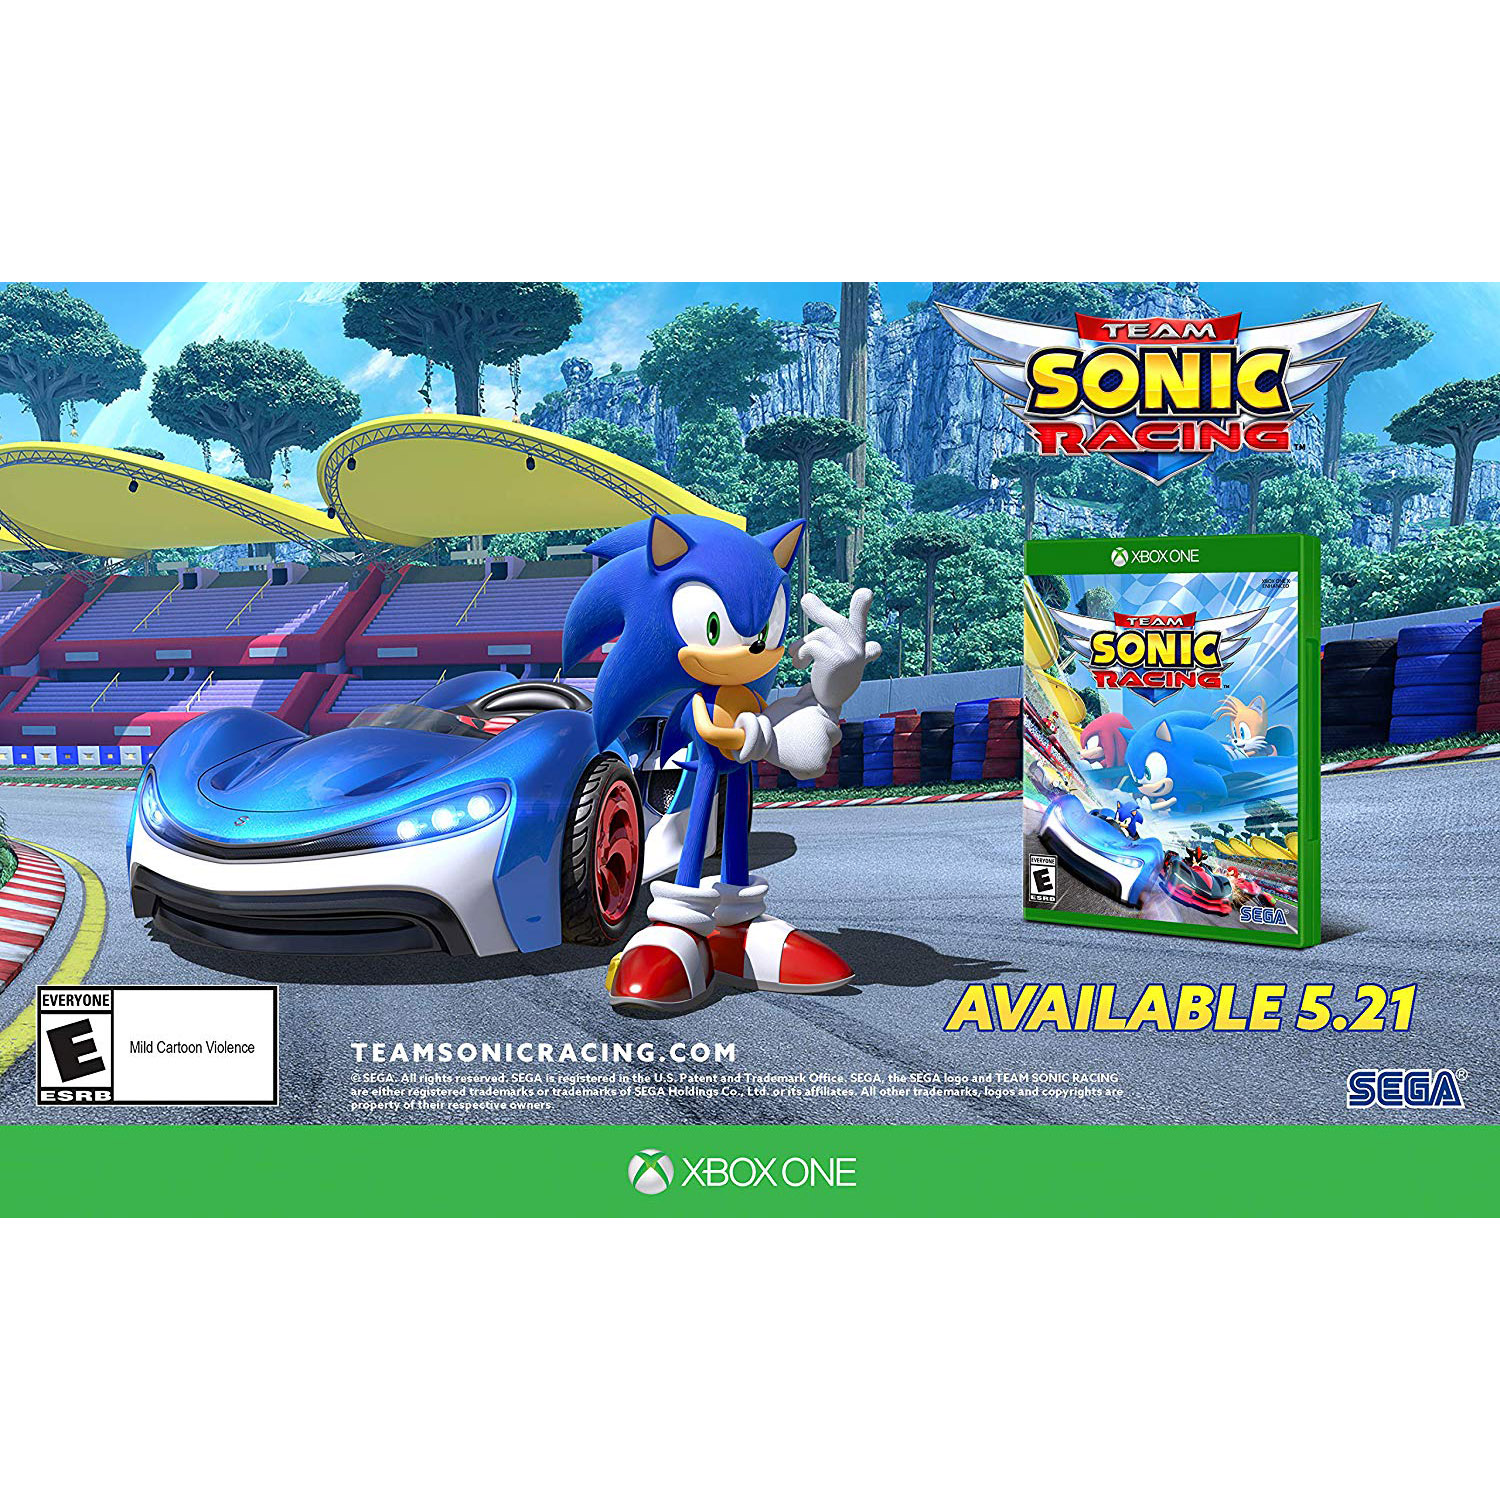 Team Sonic Racing, Sega, Xbox One, [Physical], SR-64089-2 - image 2 of 10